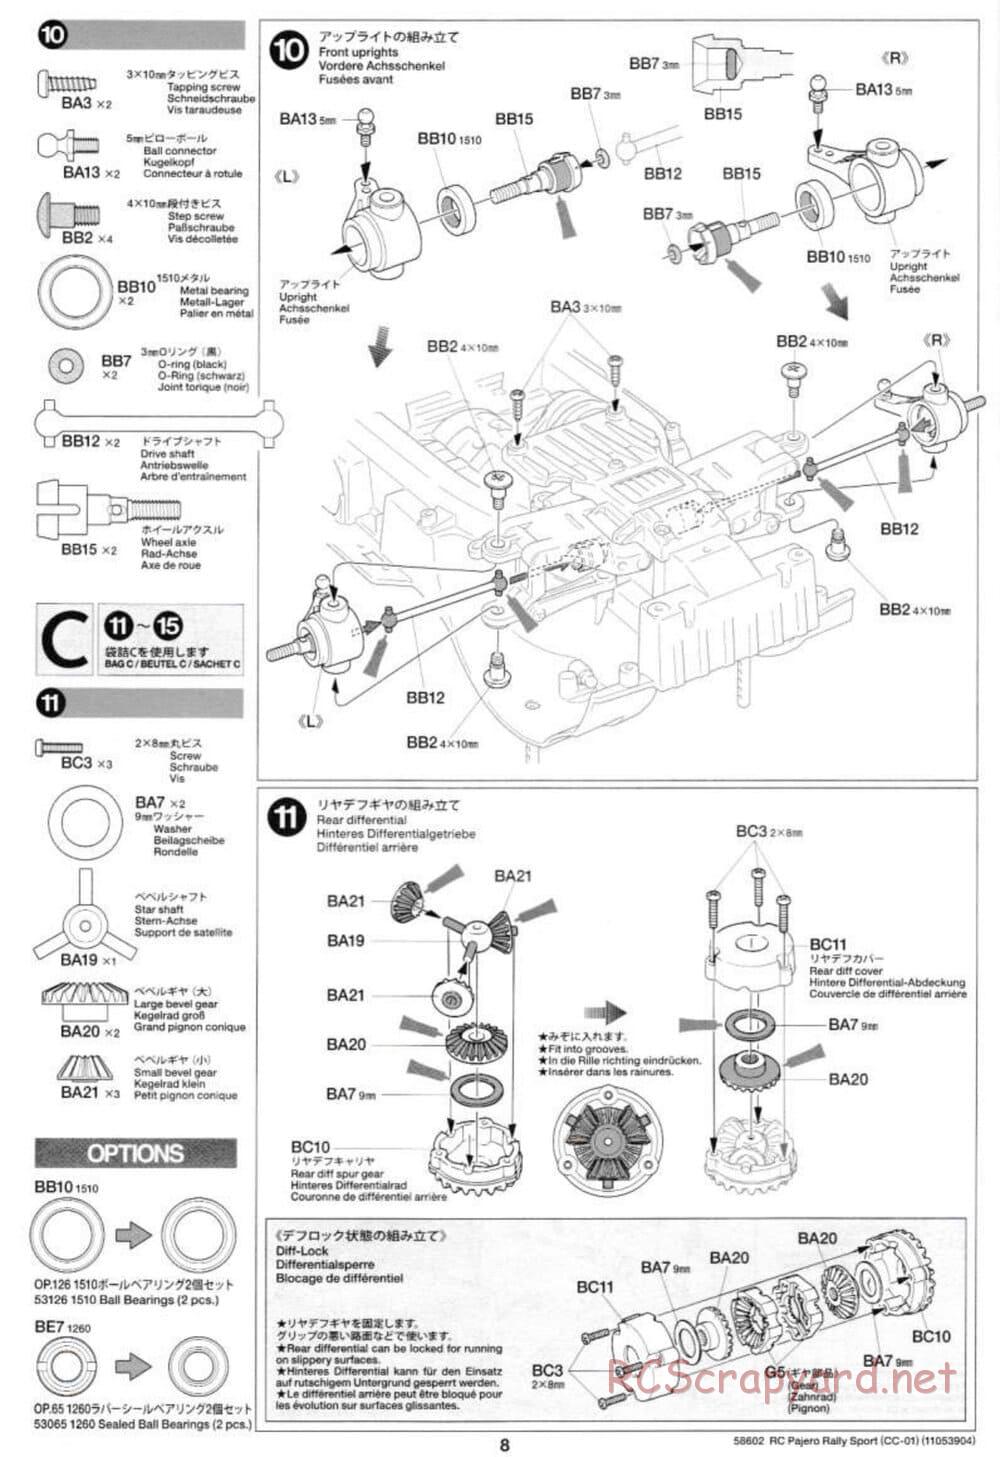 Tamiya - Mitsubishi Pajero Rally Sport - CC-01 Chassis - Manual - Page 8